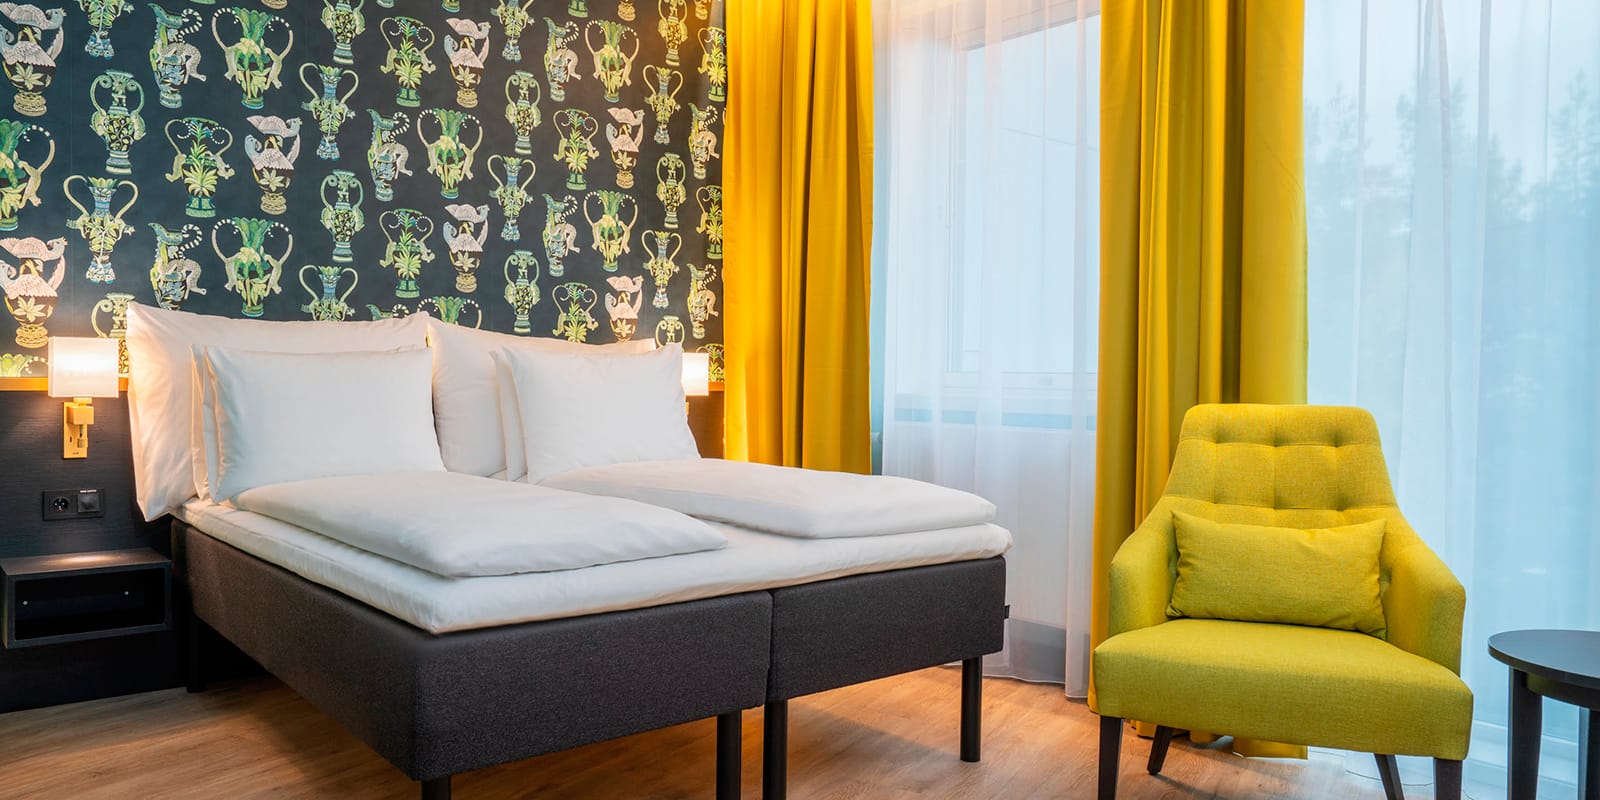 Seng og stol i business room på Thon Hotel Linne i Oslo